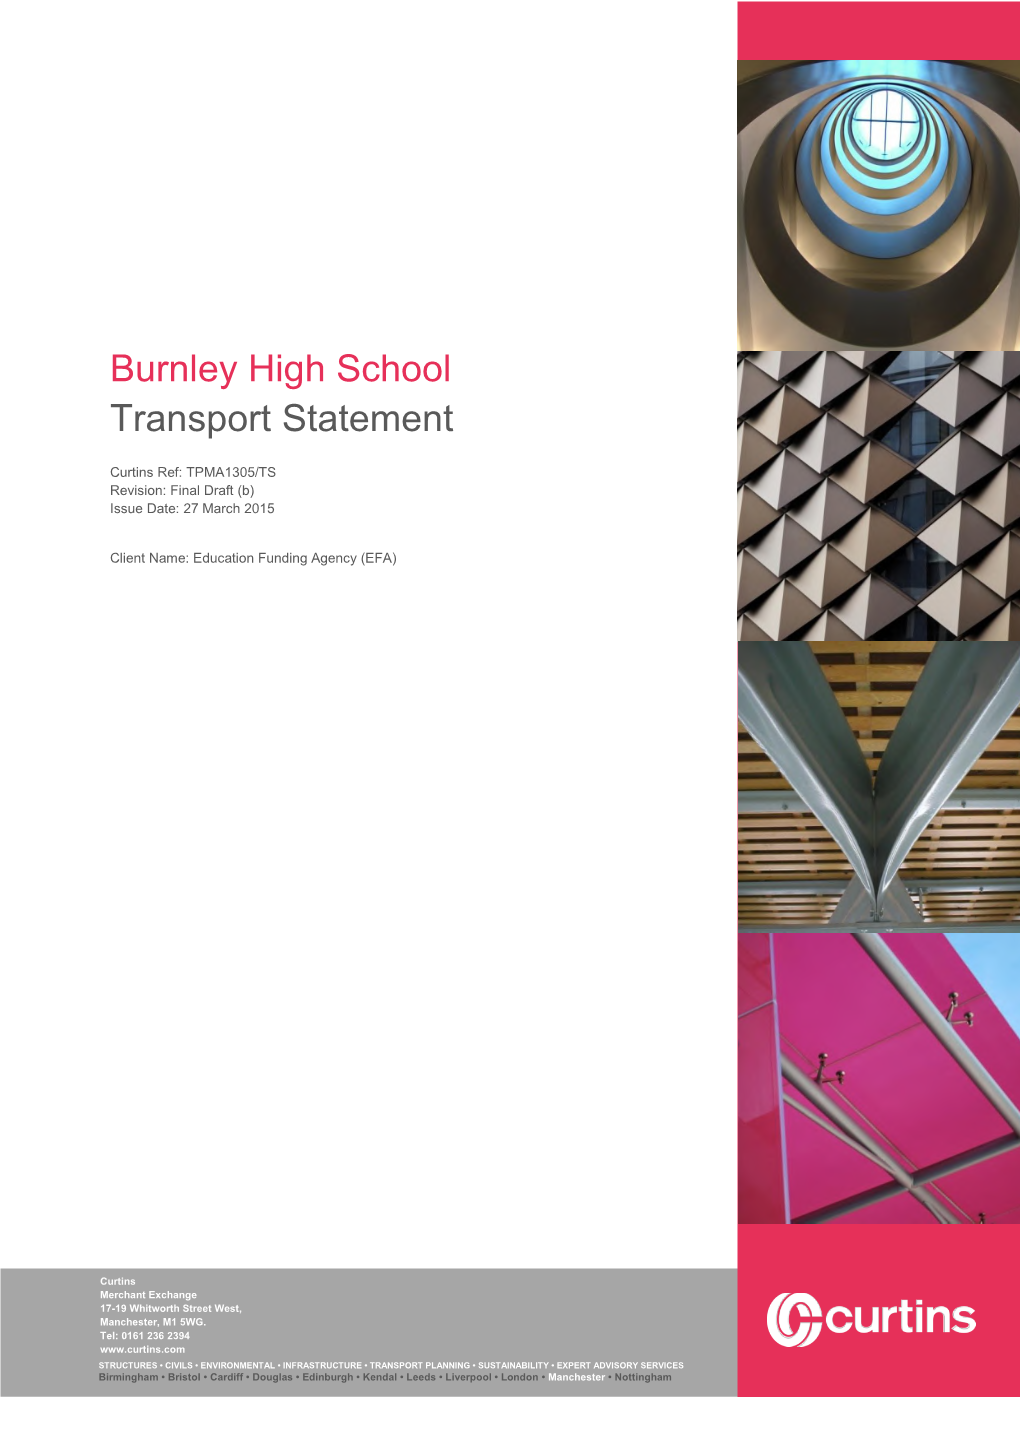 Burnley High School Transport Statement